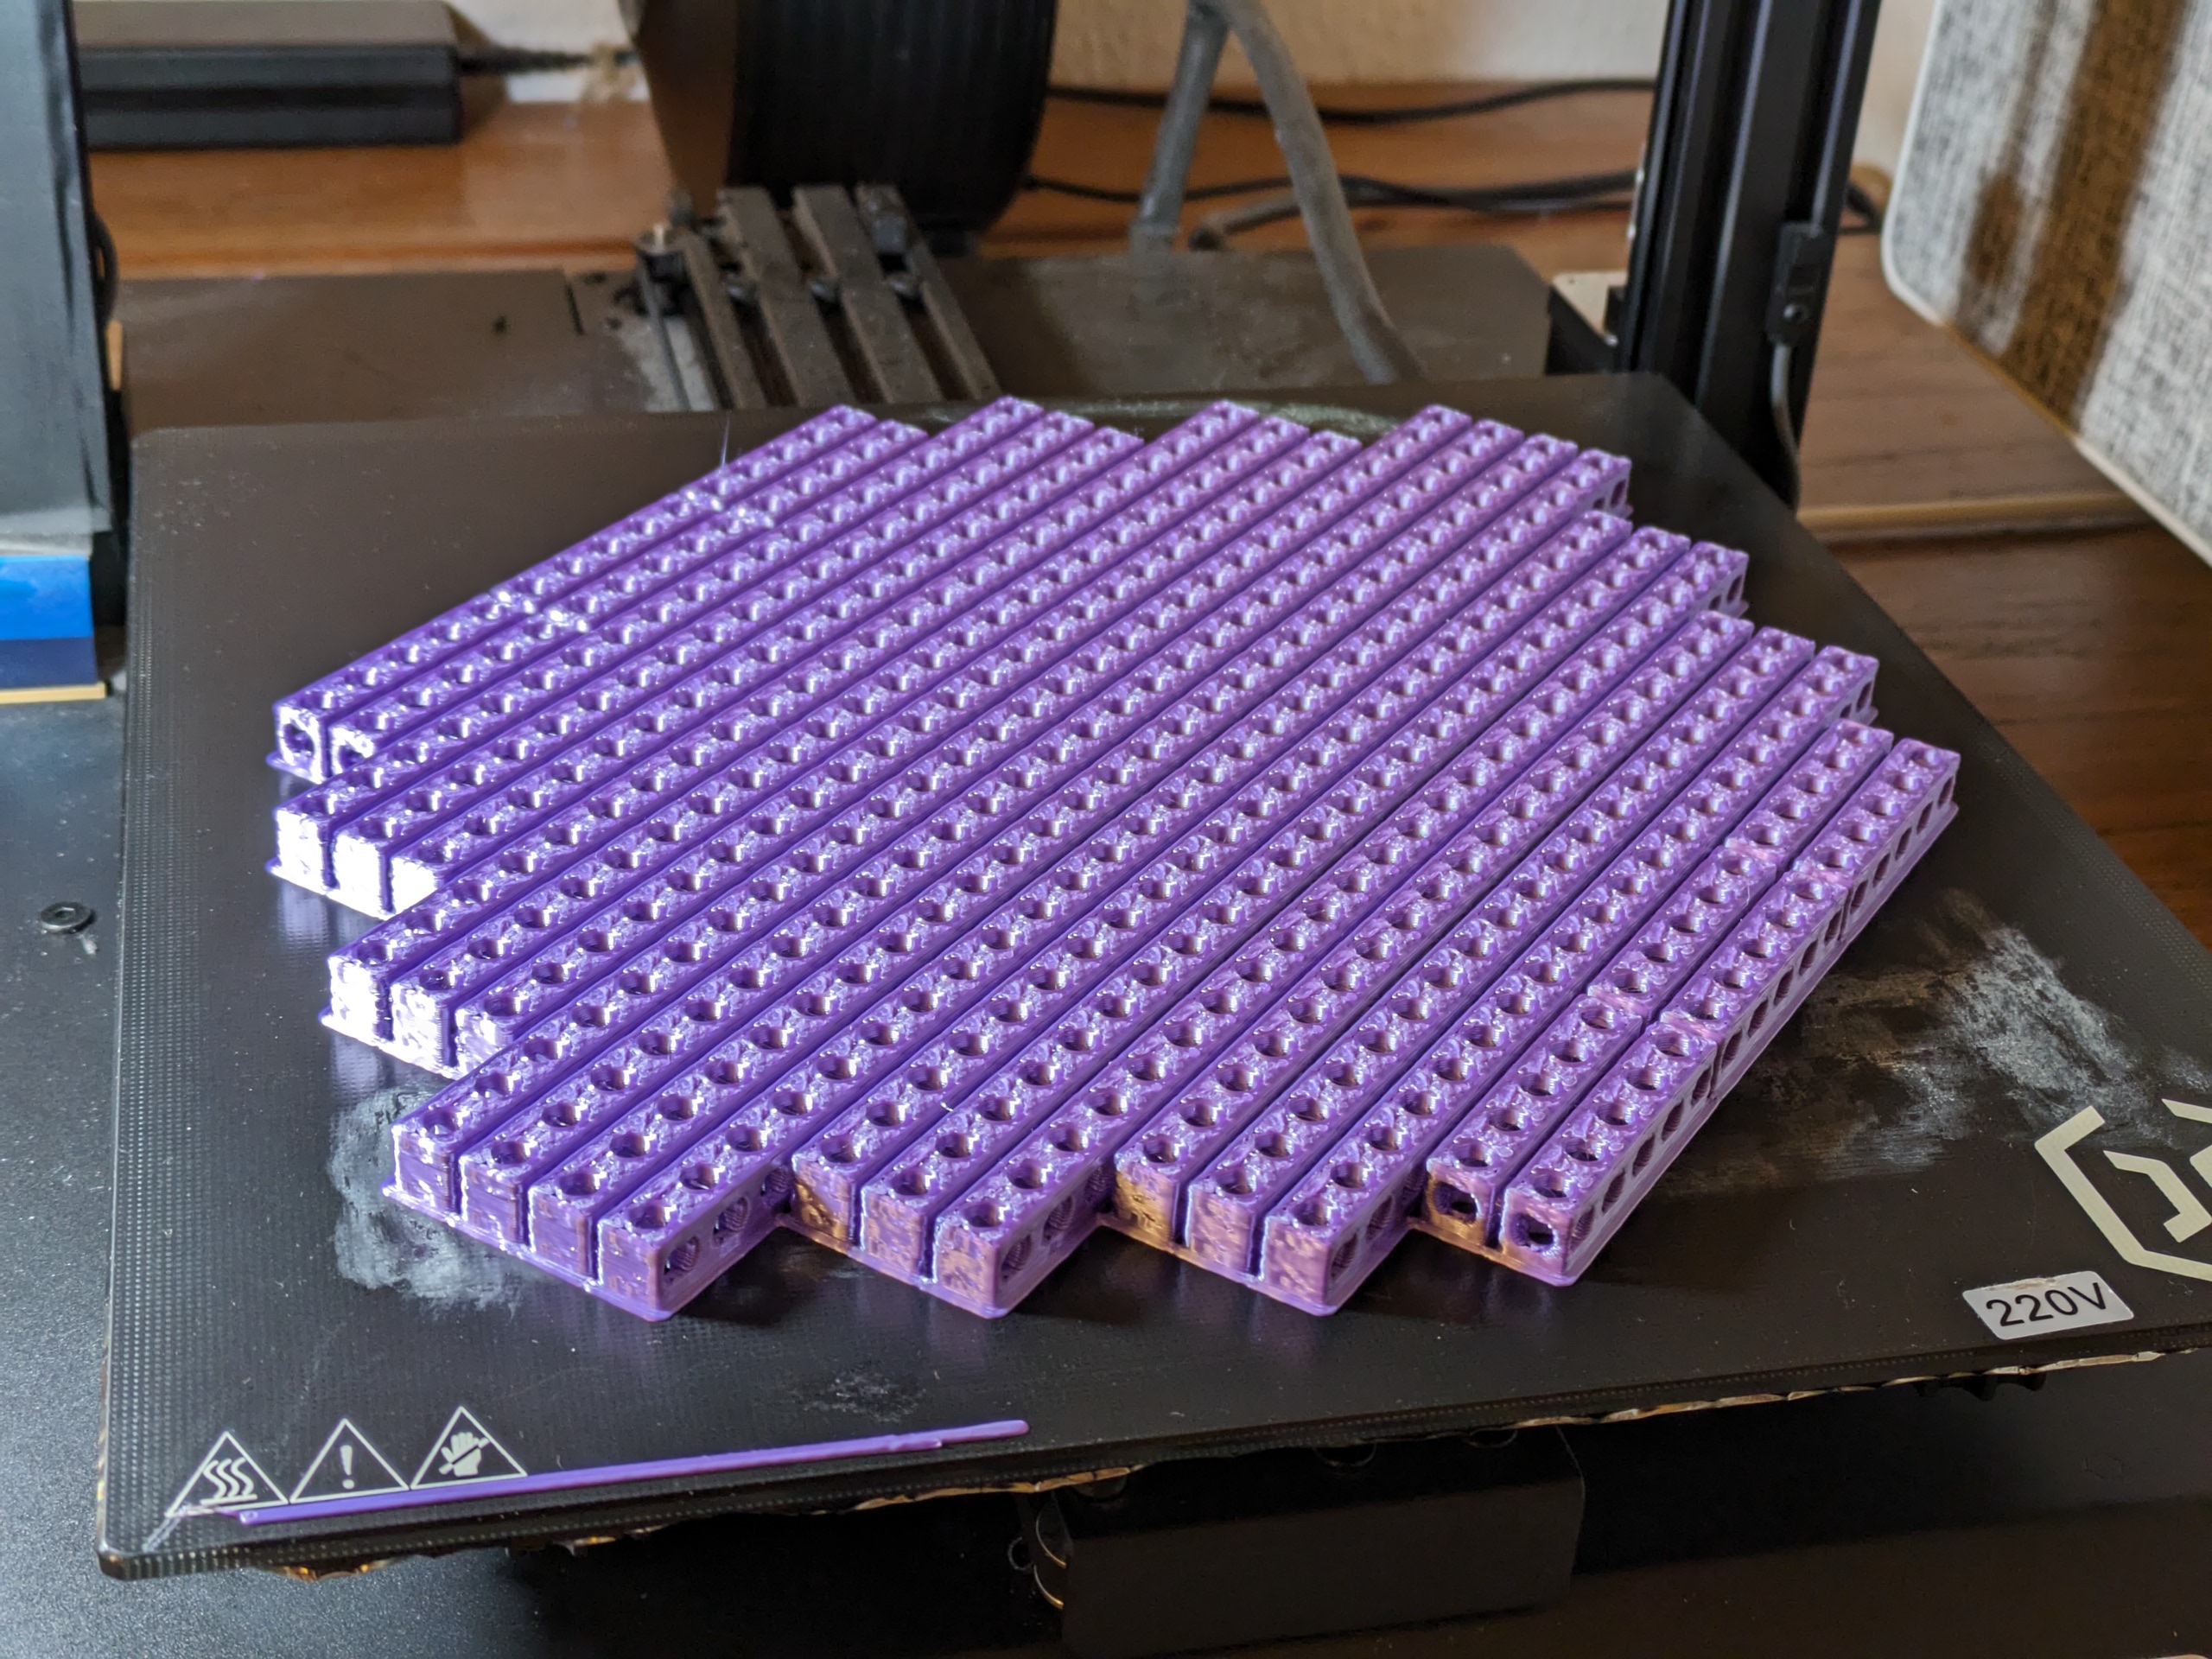 Mini Metric Gridbeam filling a 3D printer's bed